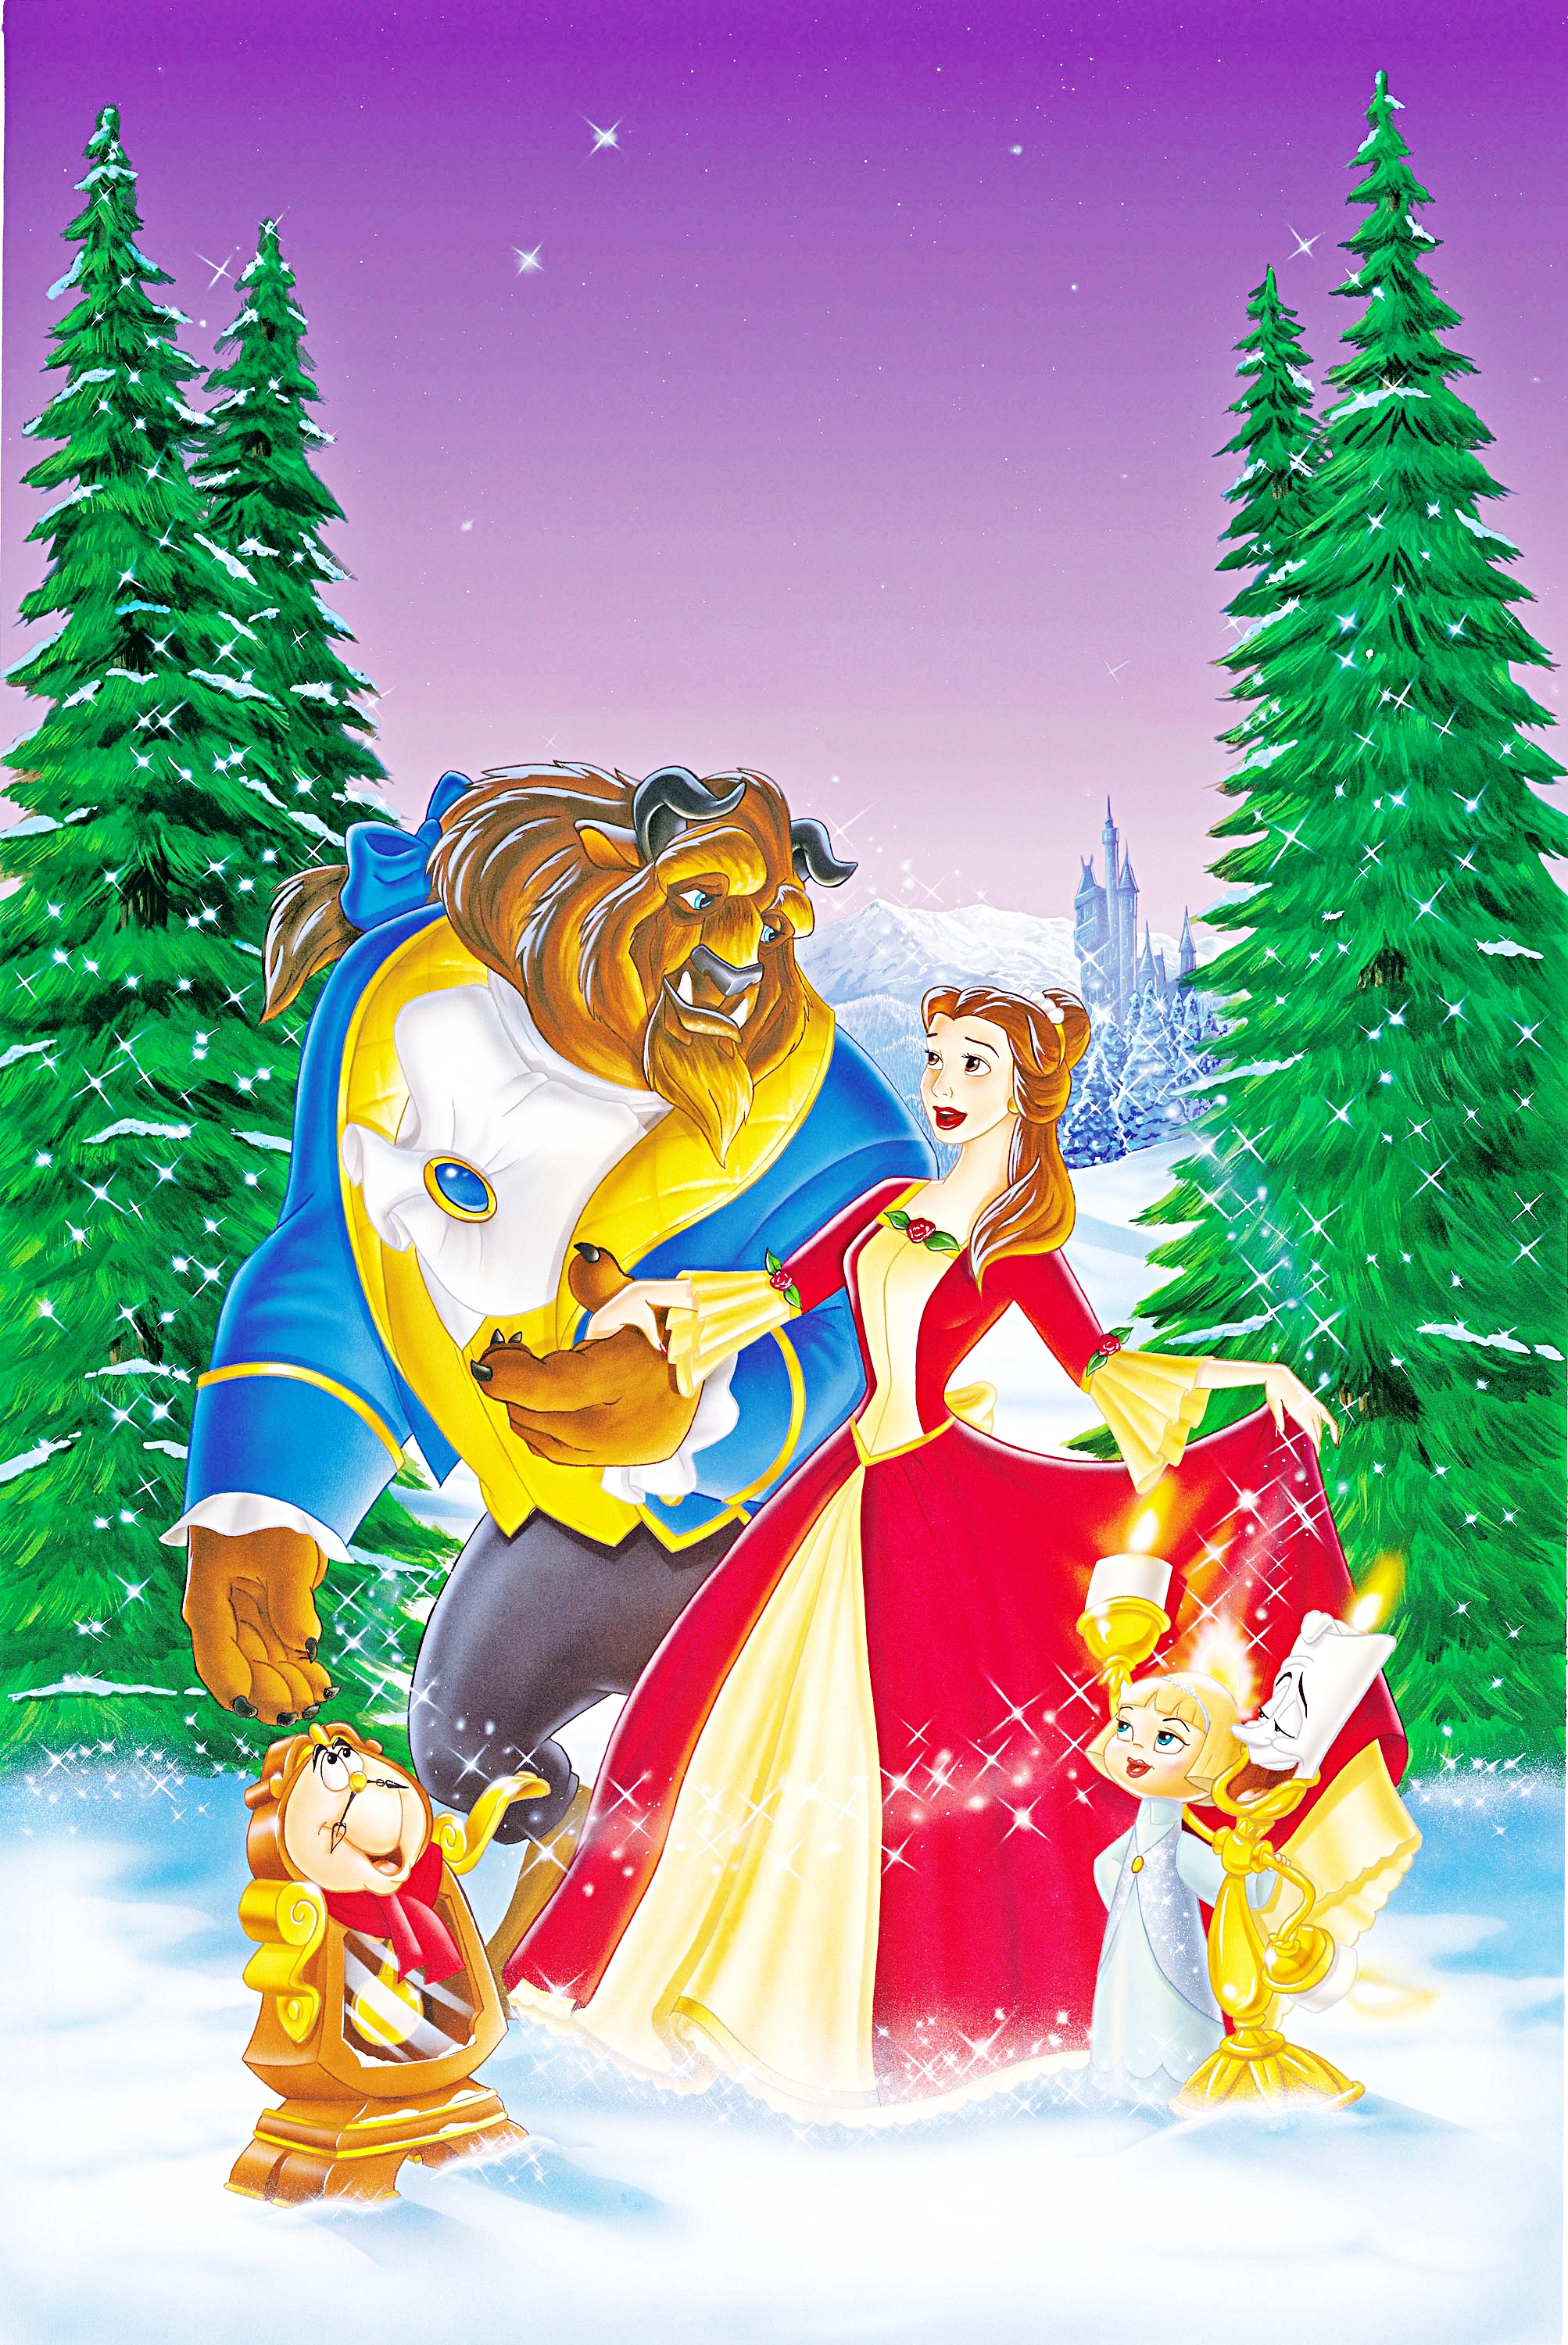 Immagini Natalizie Walt Disney.Walt Disney Posters Beauty And The Beast The Come D Incanto Natale Personaggi Disney Foto 32500176 Fanpop